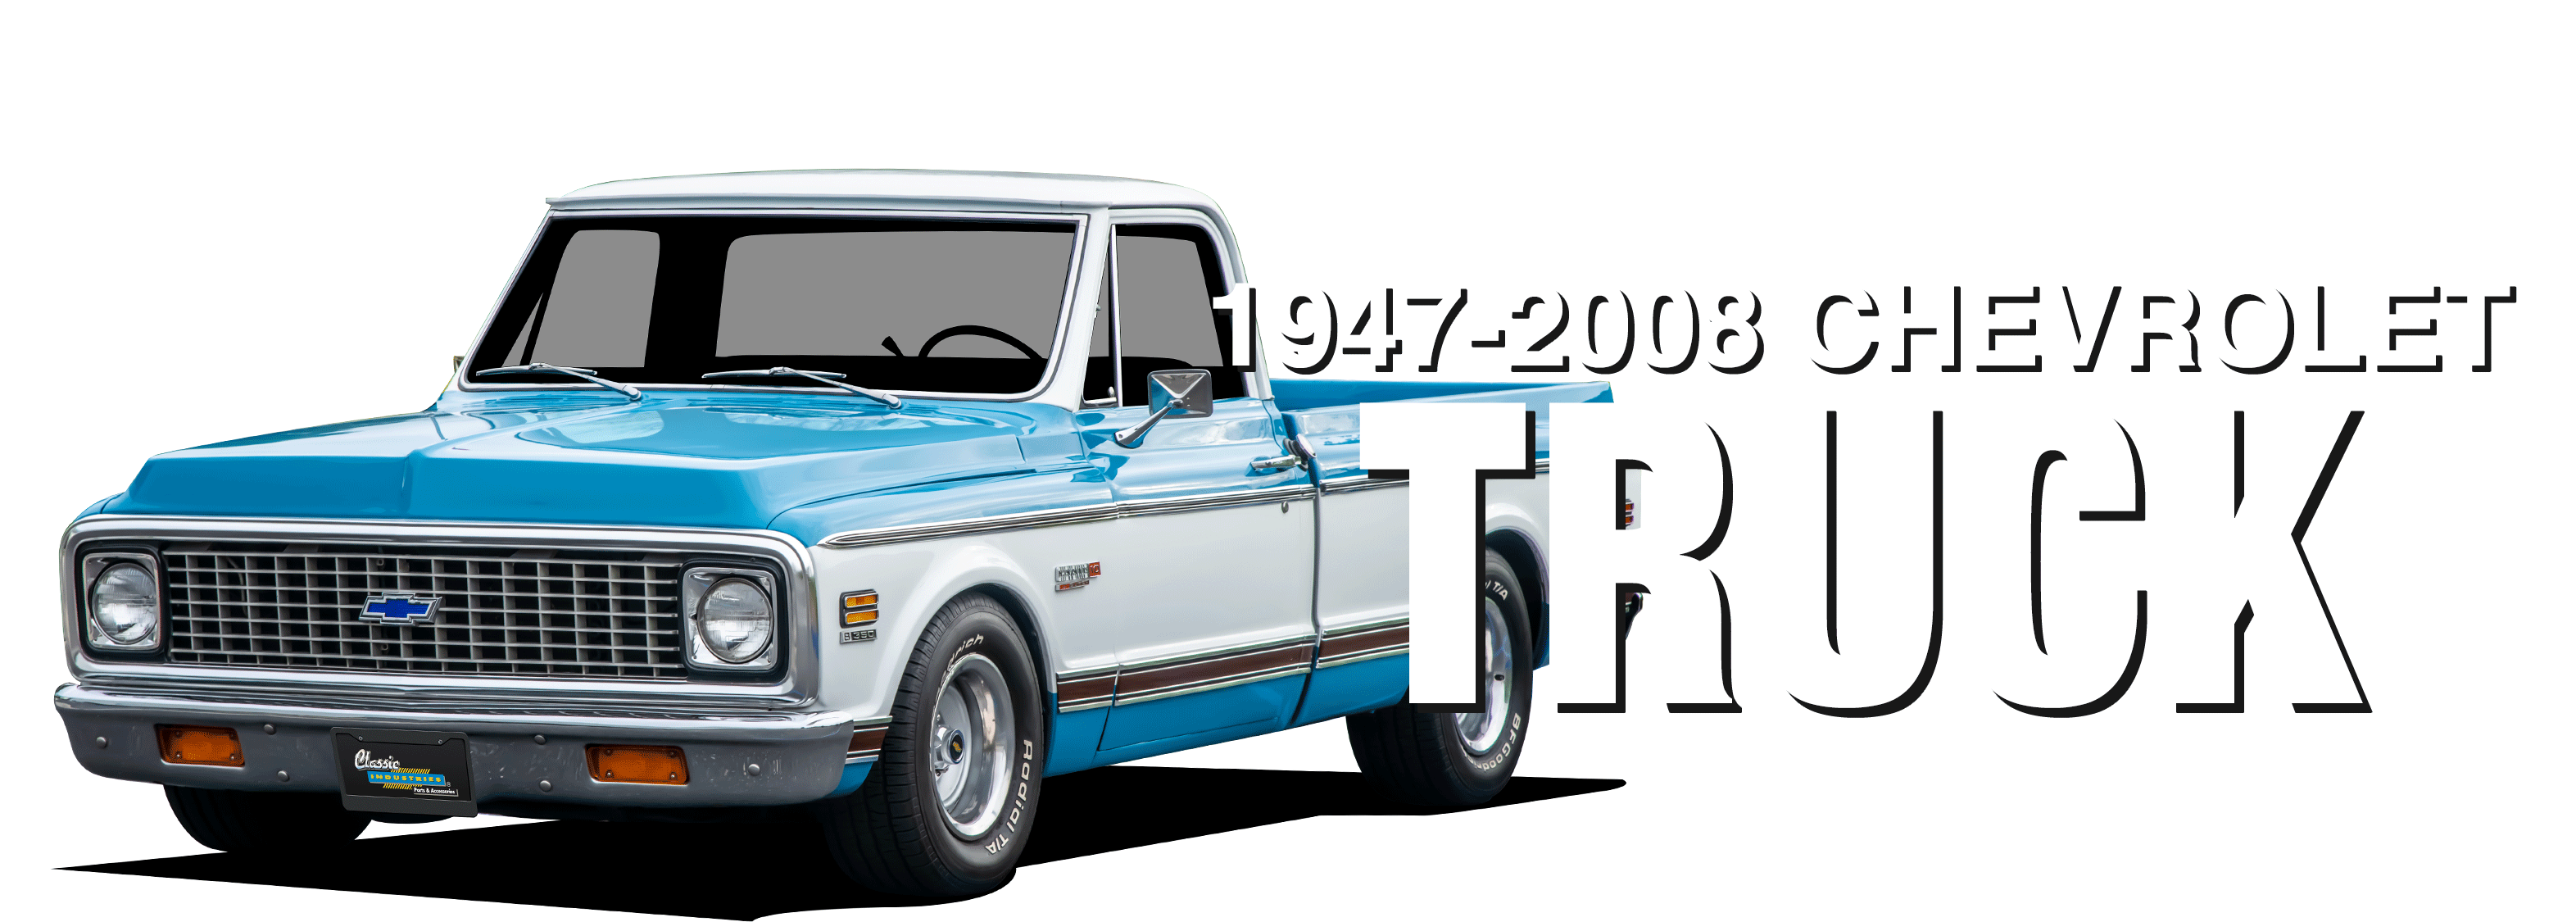 1947-2008 Chevrolet Truck